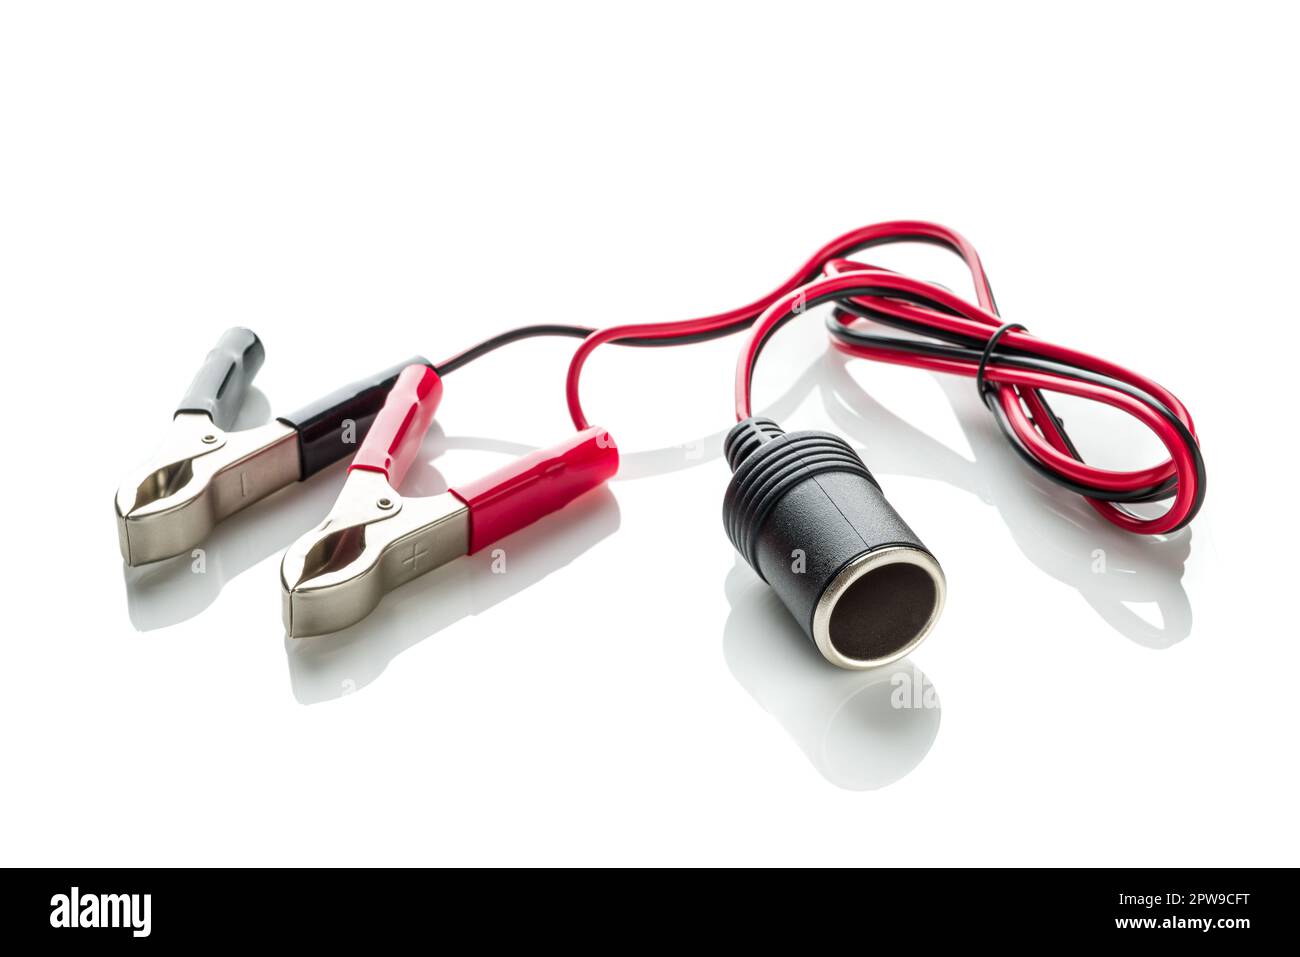 Battery Clip Cigarette Lighter Plug Adapter for 12-volt Applications